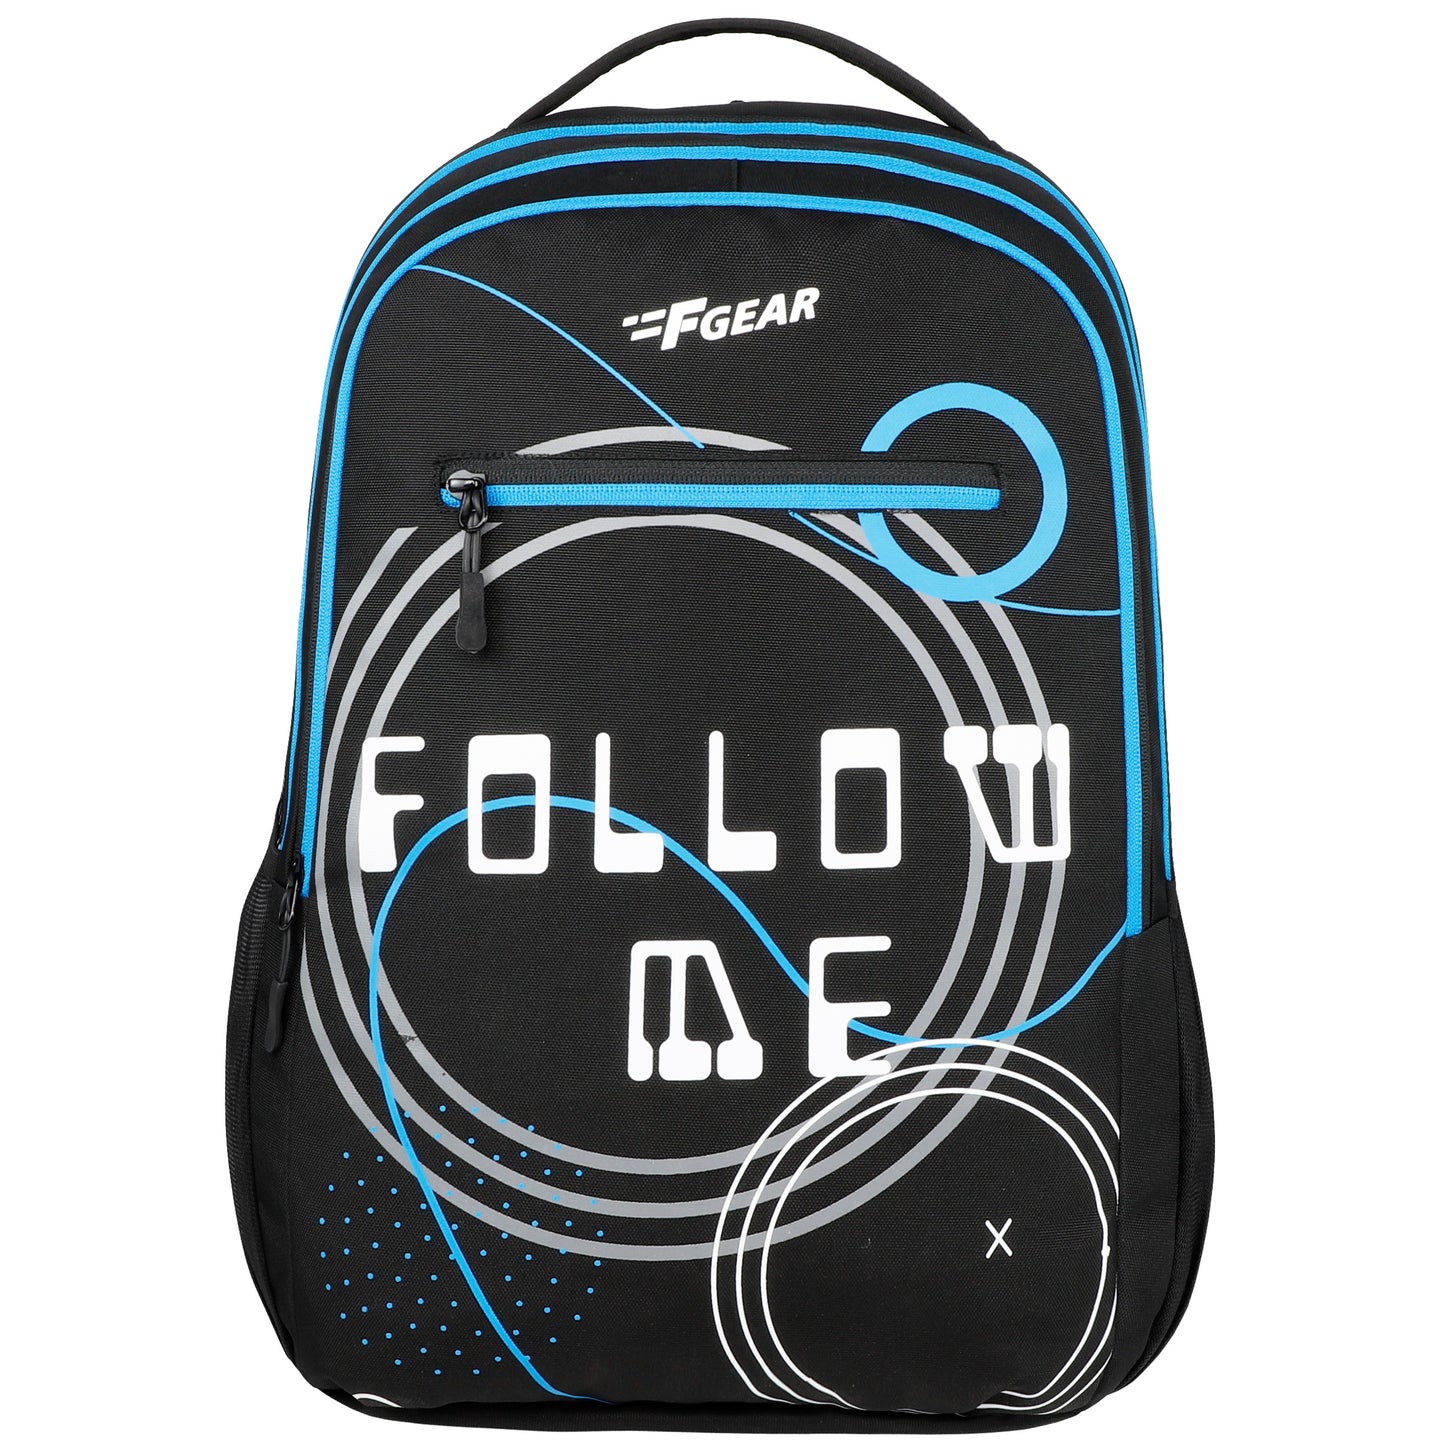 Follow Me 35L Black Blue Backpack